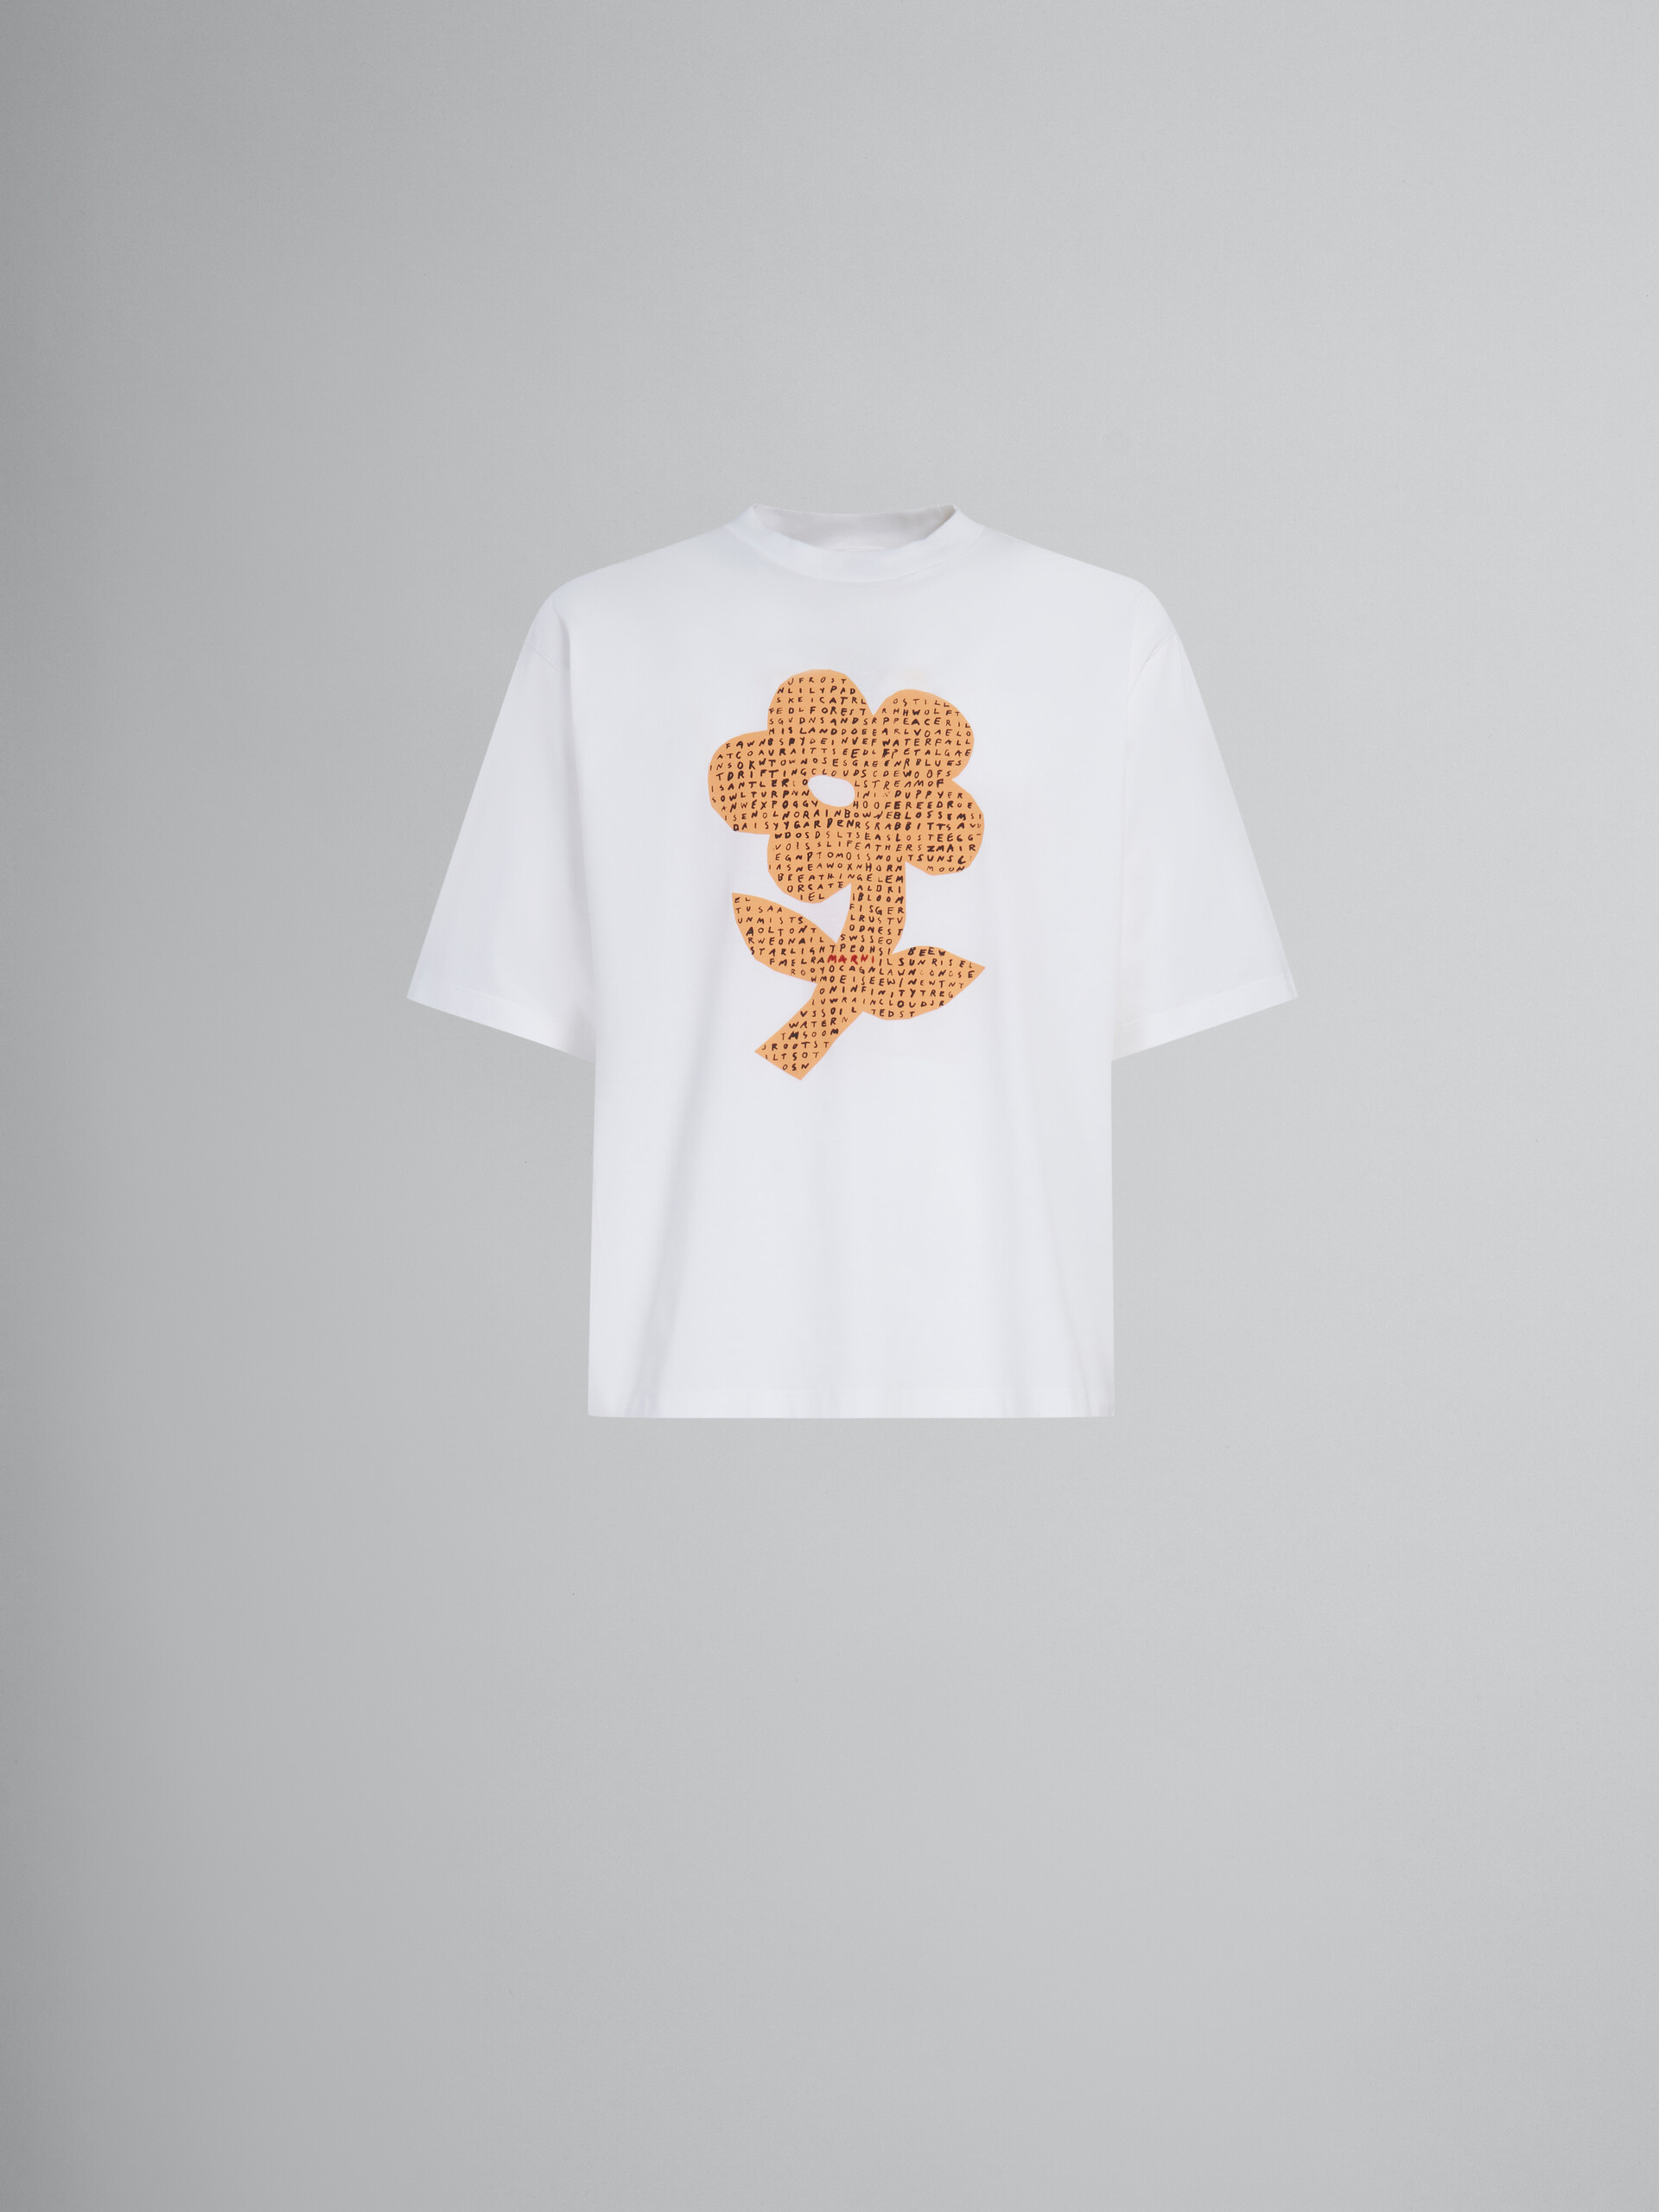 T-shirt in cotone biologico bianco con stampa puzzle a fiore - T-shirt - Image 1